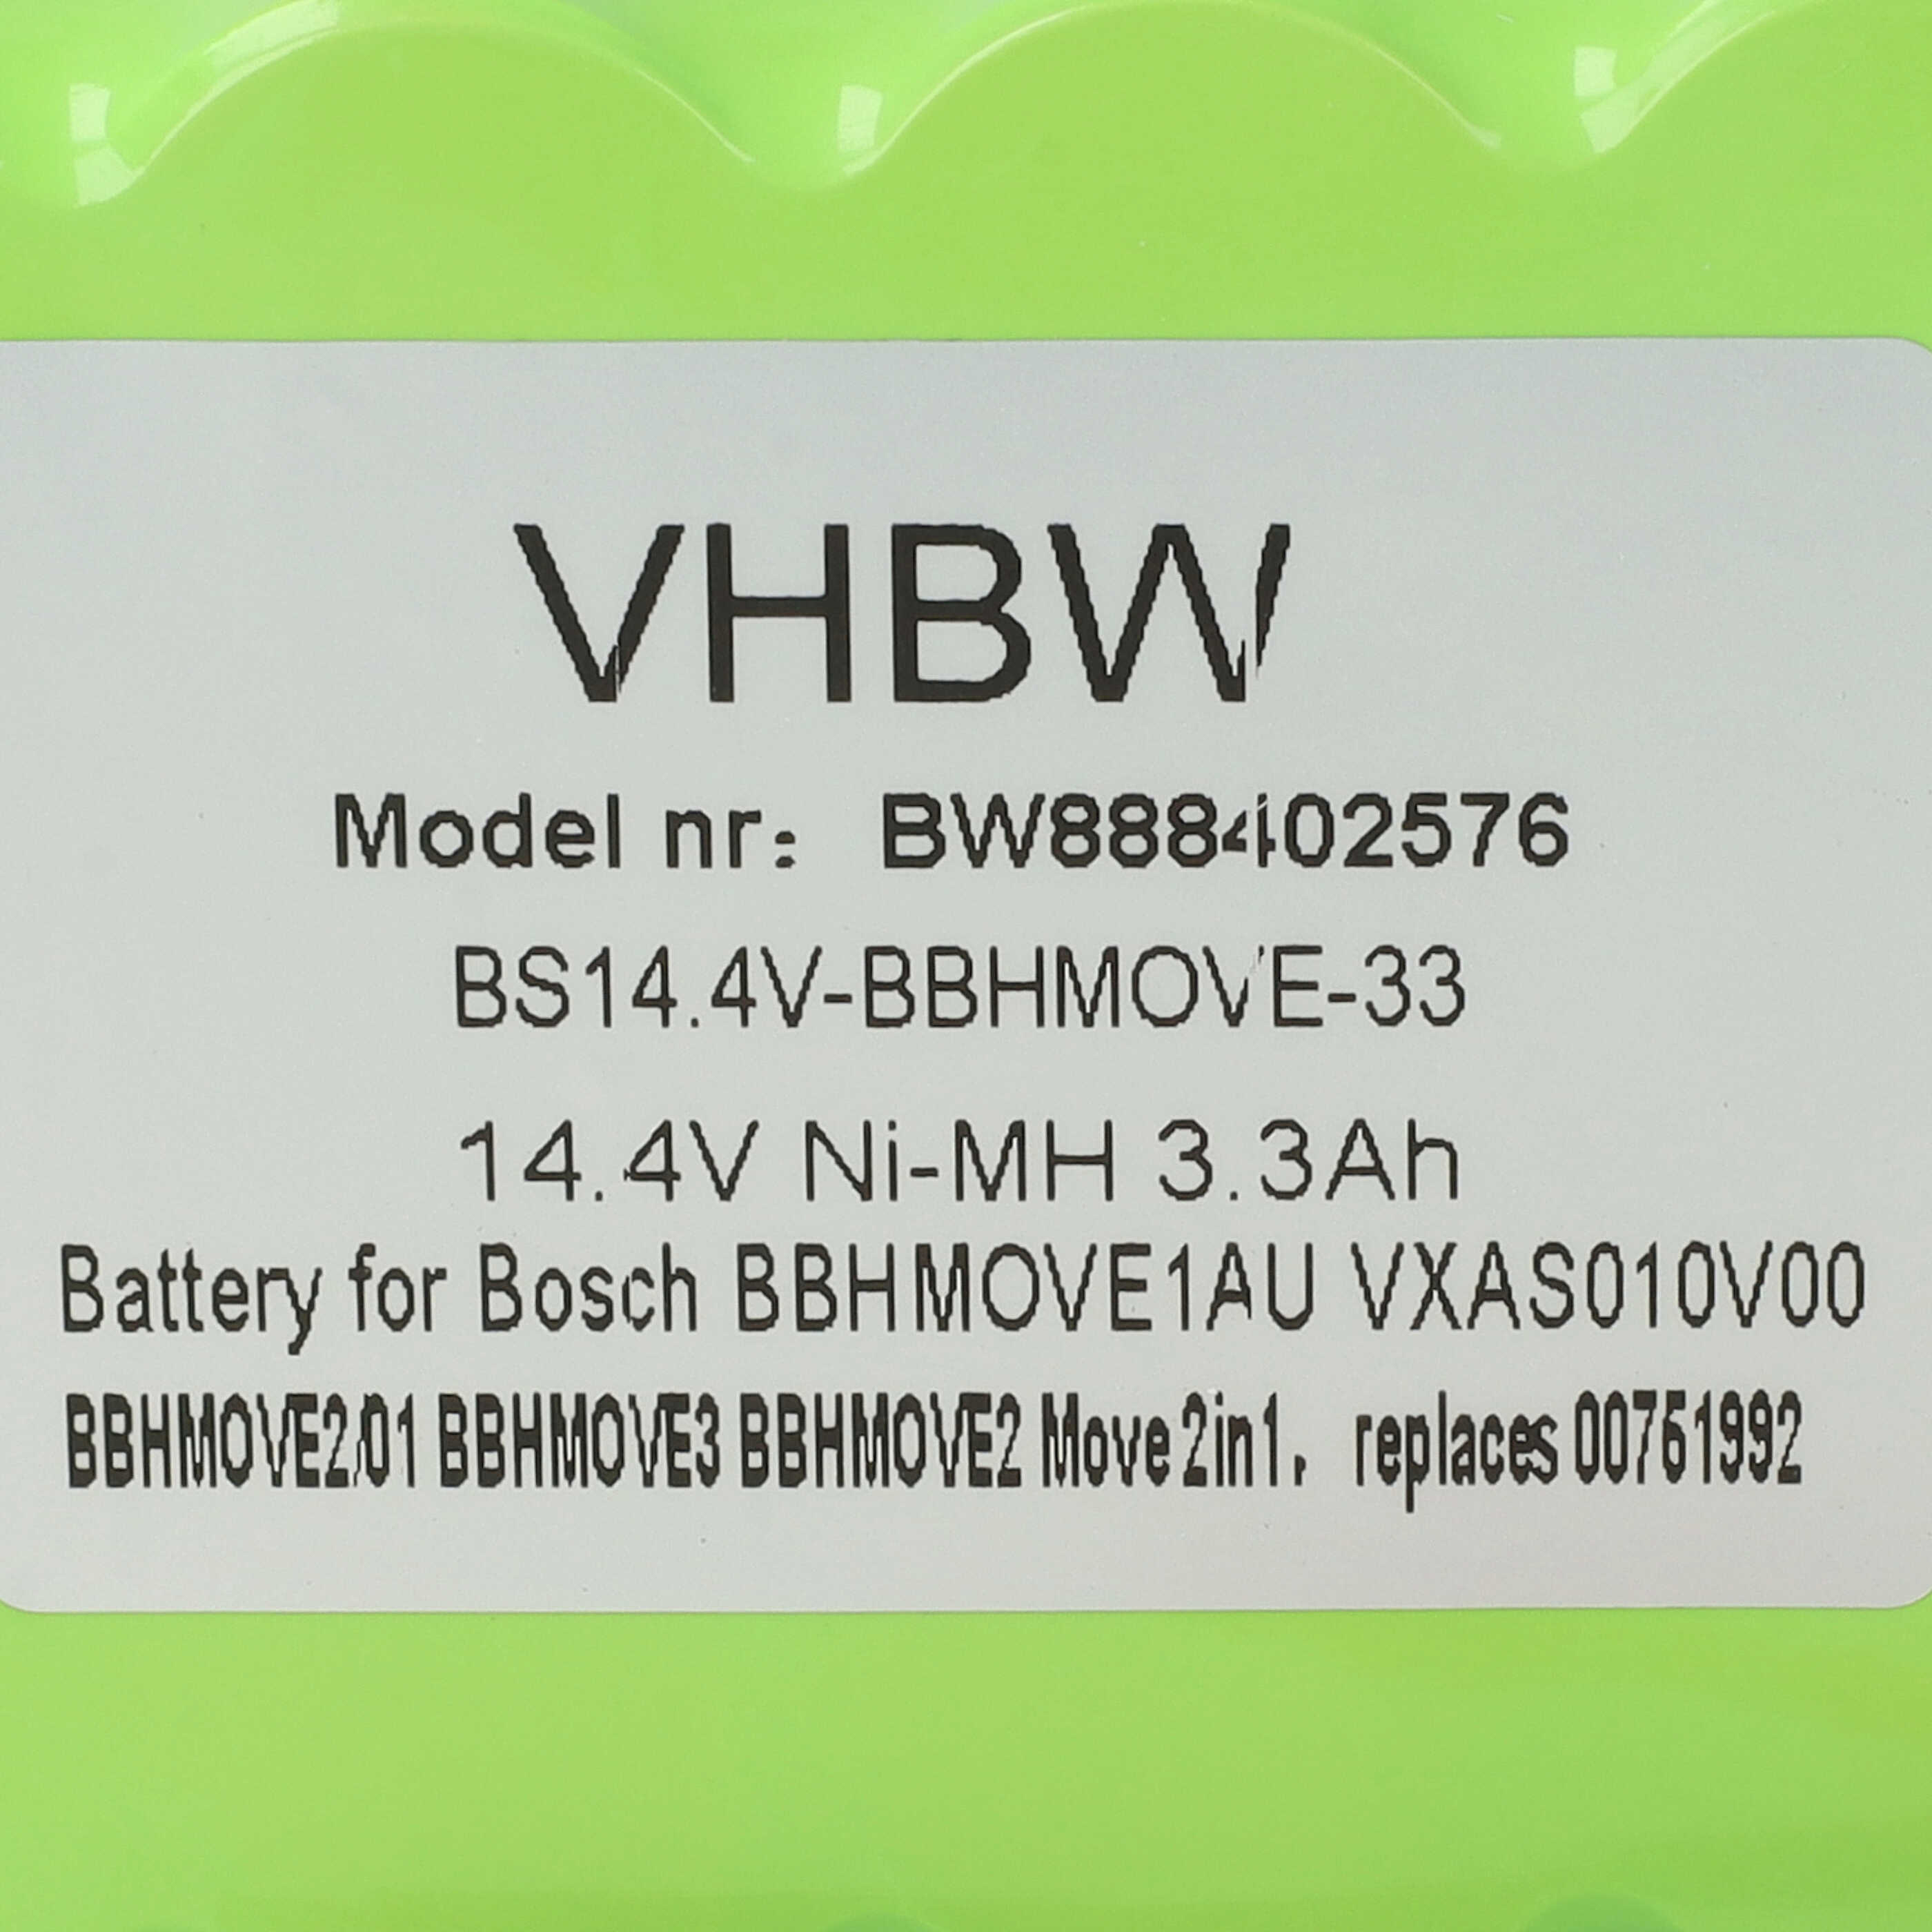 Batería reemplaza Bosch FD8901, GP180SCHSV12Y2H, 00751992 para aspiradora Bosch - 3300 mAh 14,4 V NiMH